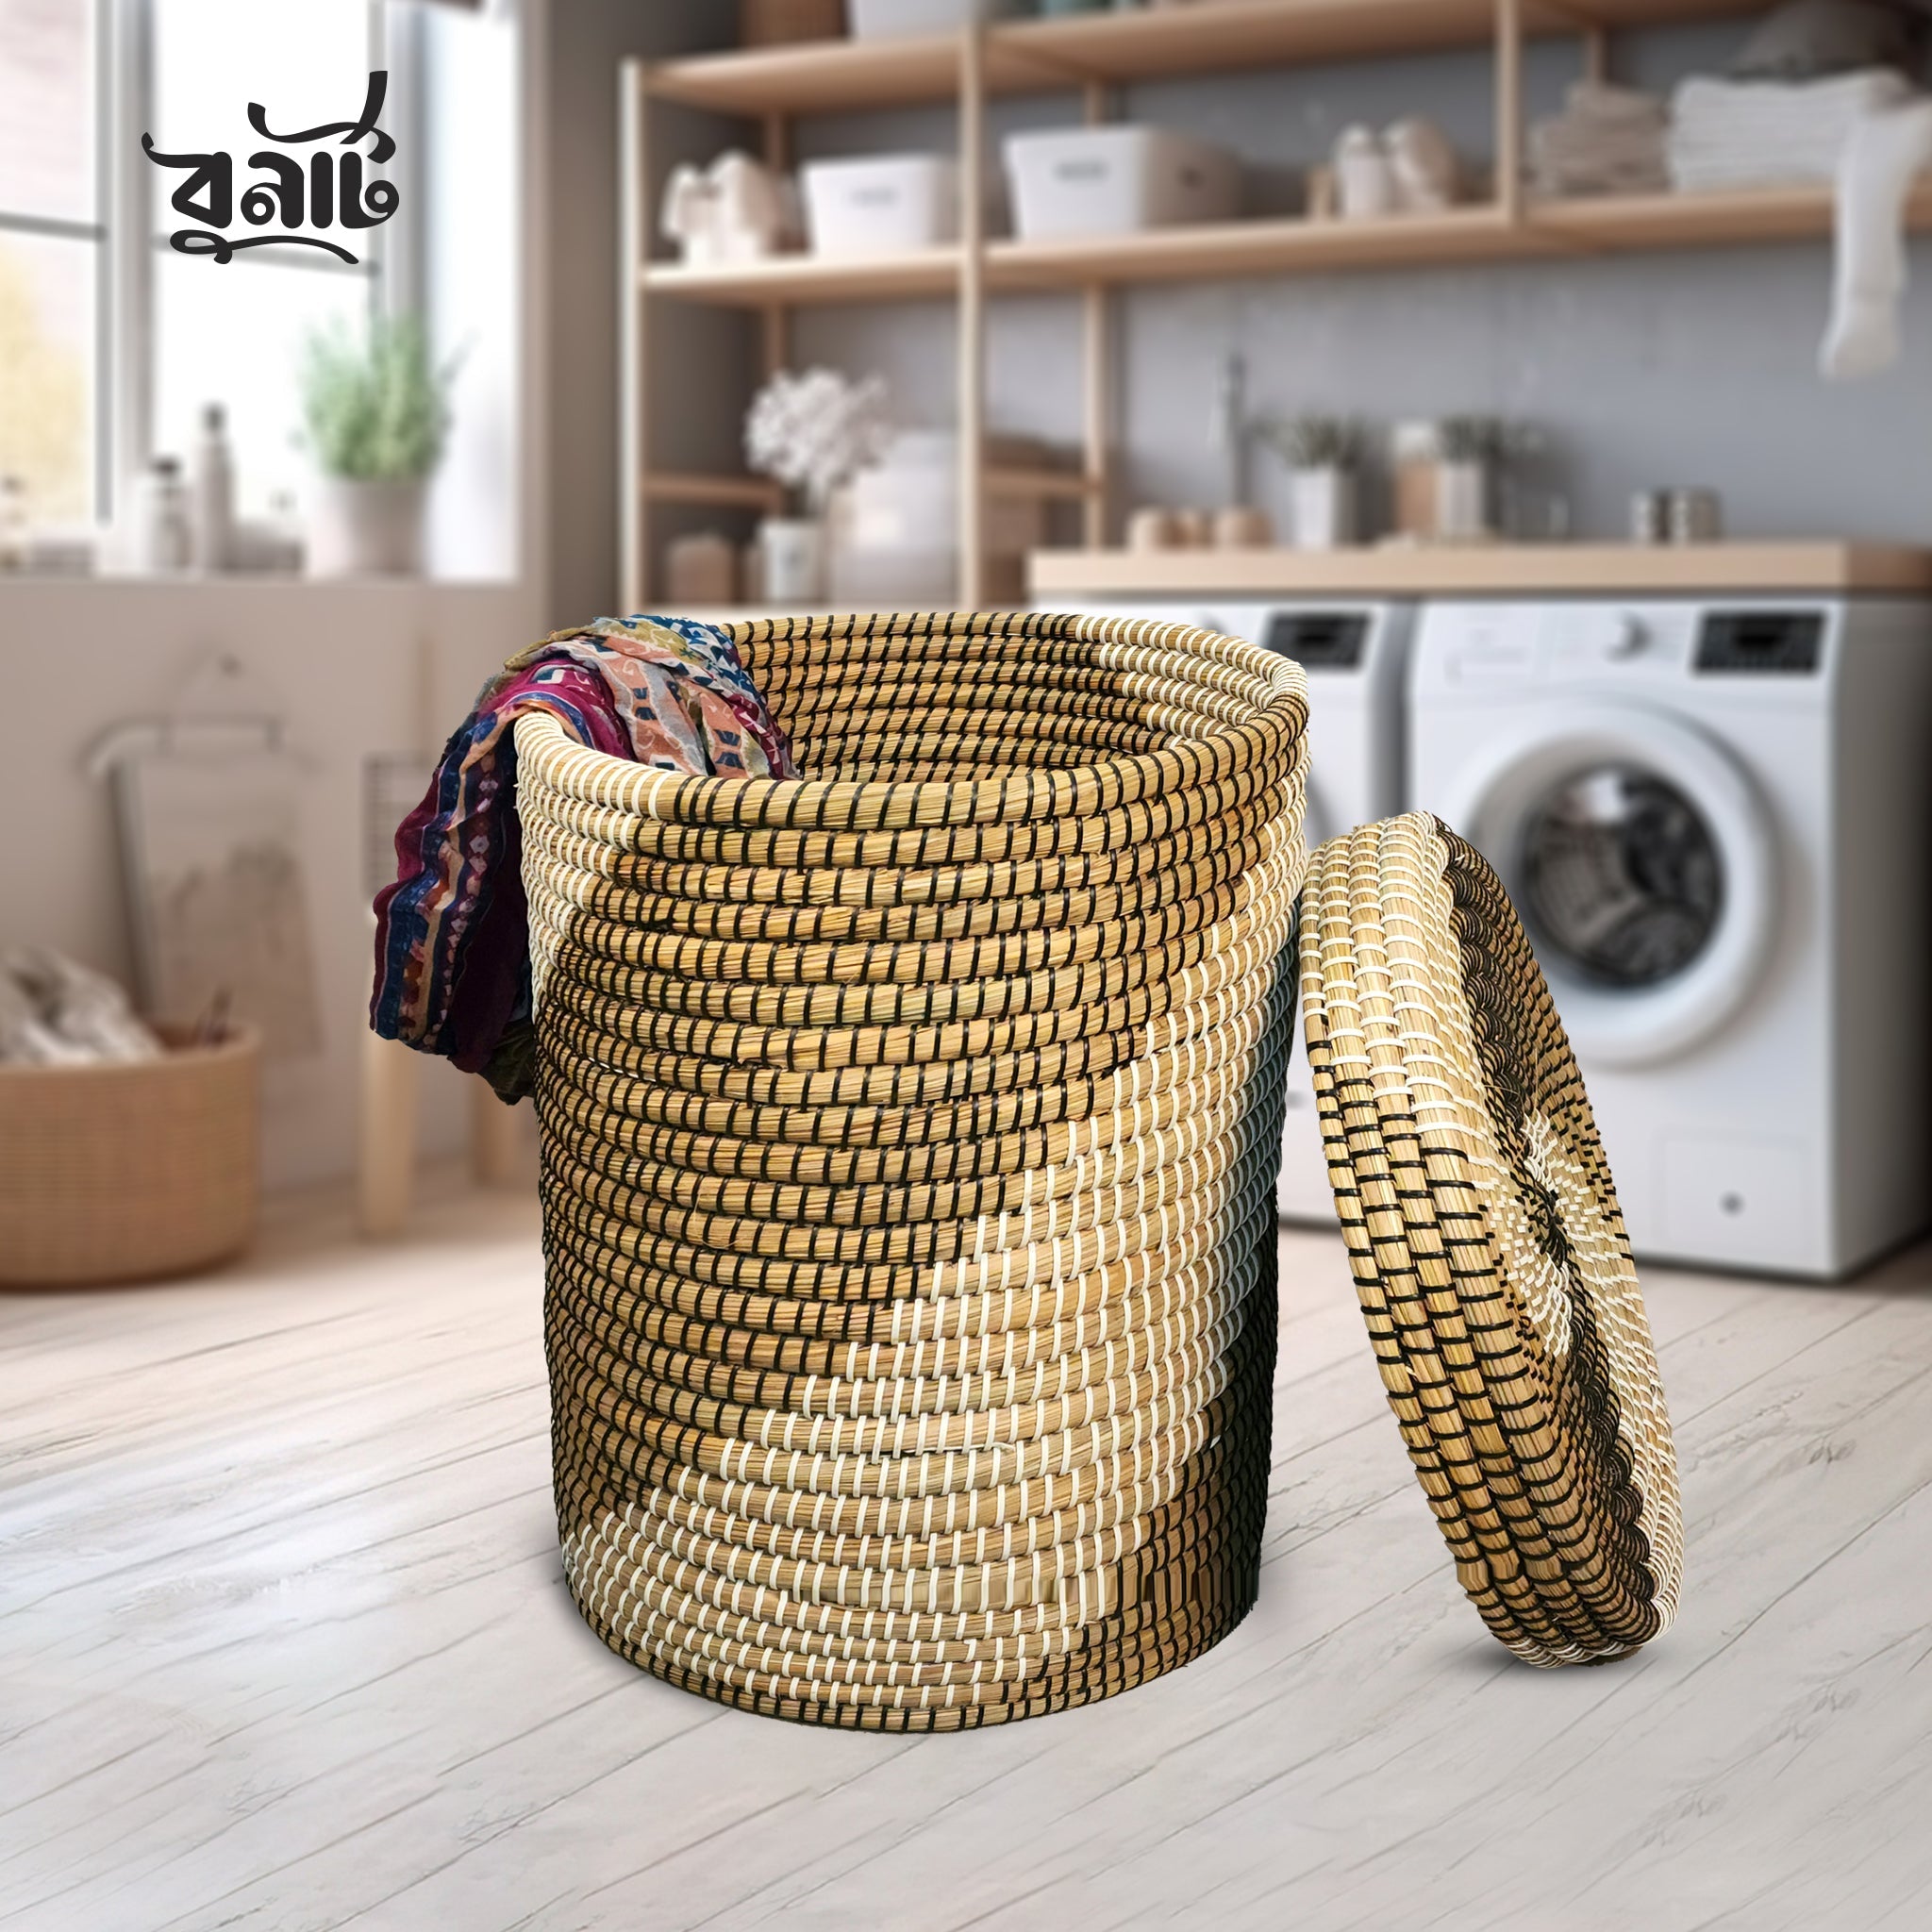 Sea-Grass Laundry Baskets (Large)